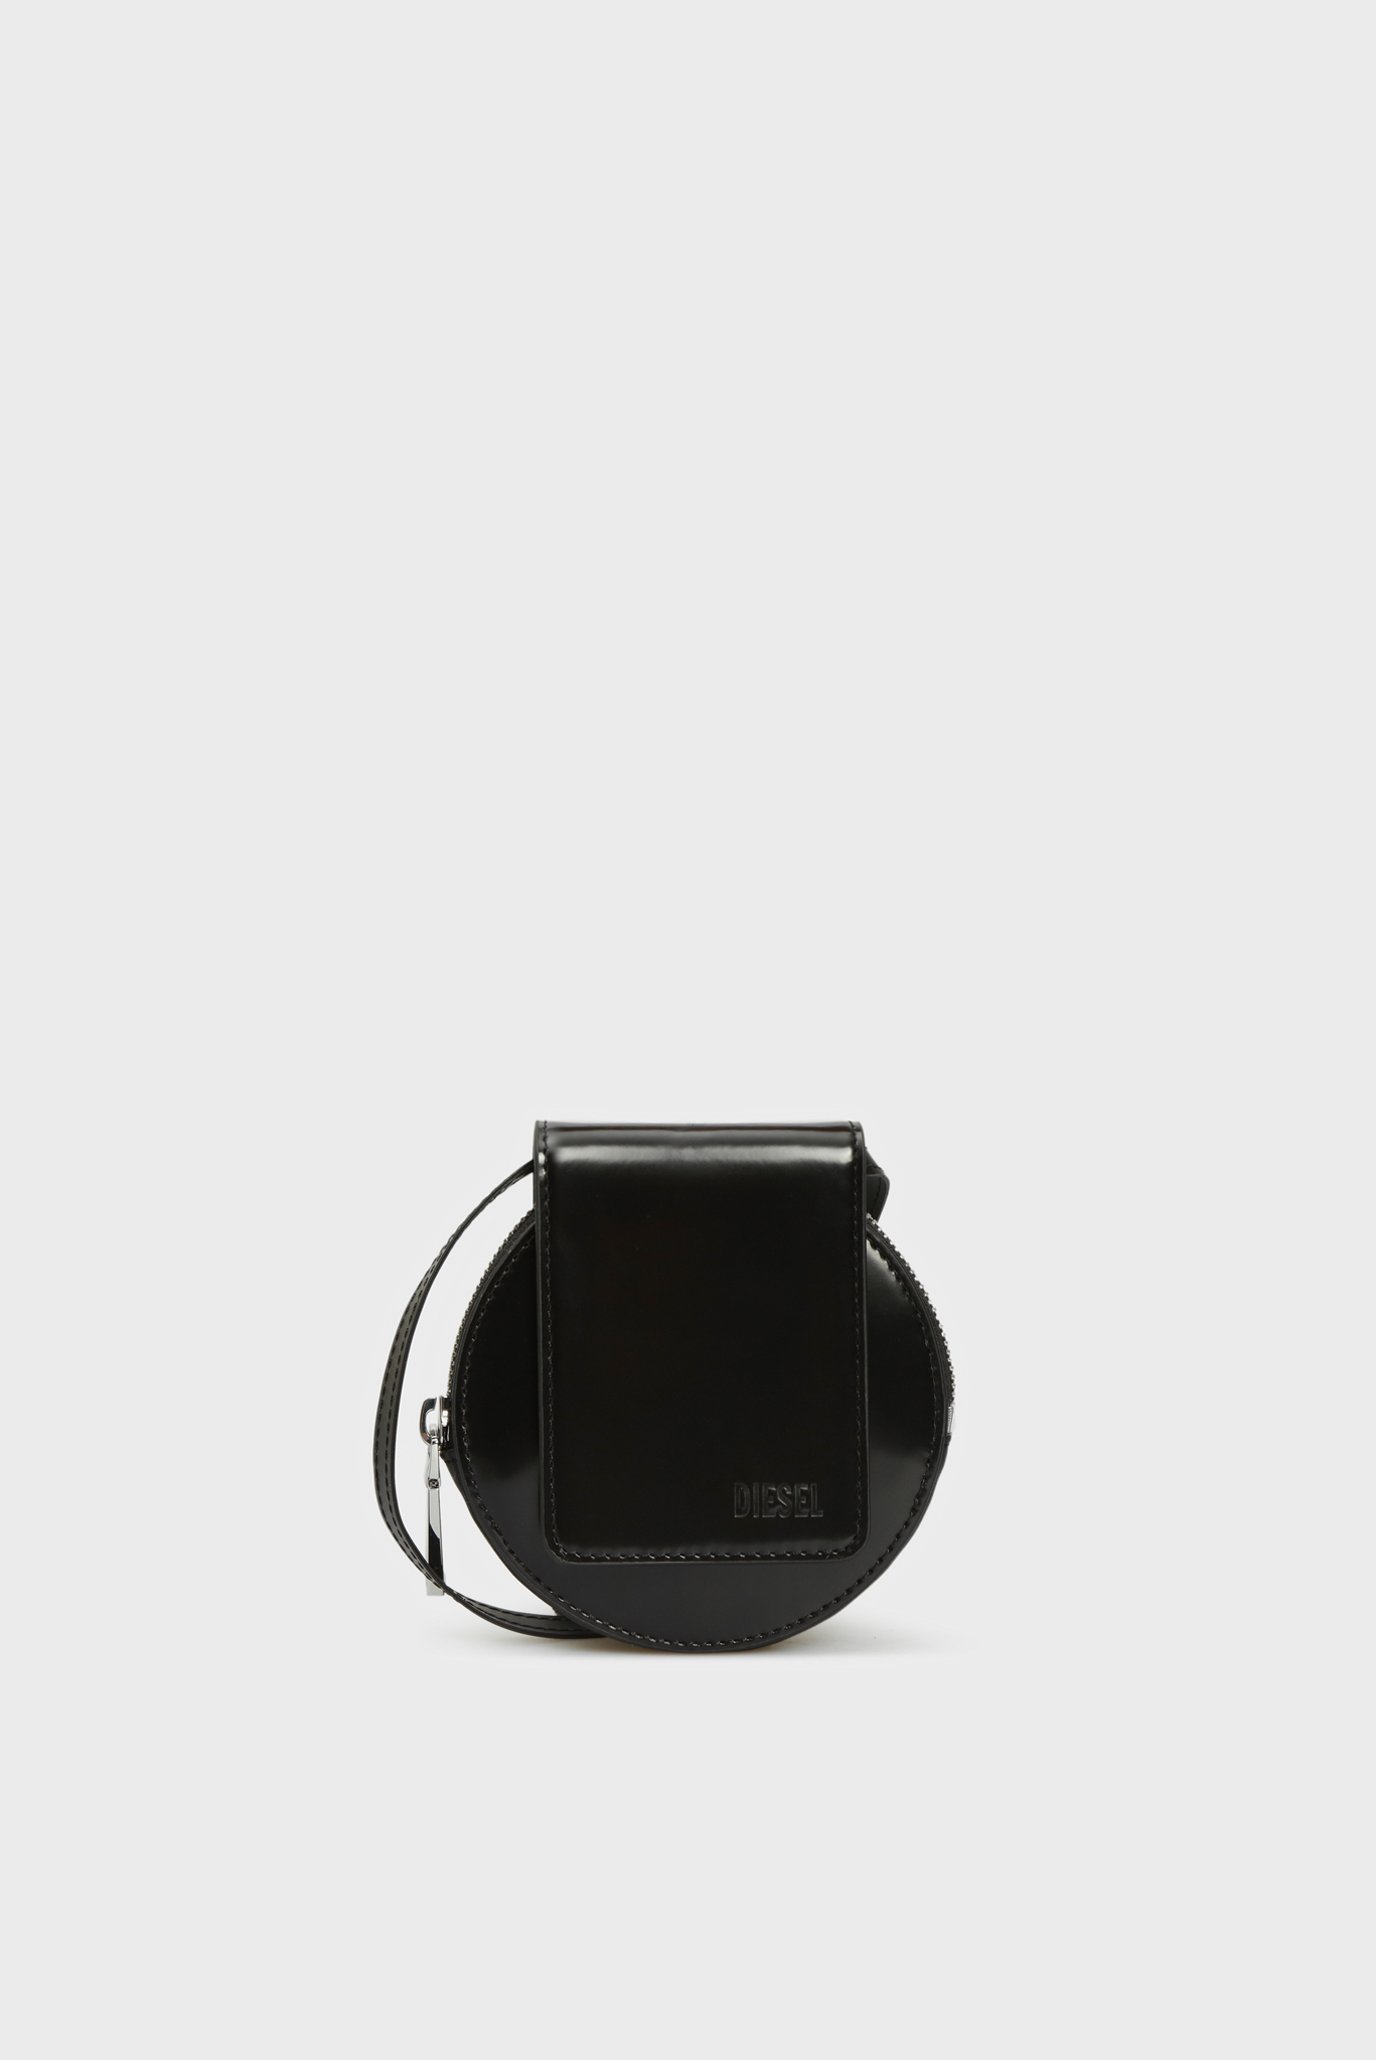 Жіноча чорна шкіряна сумка CANDYMORE / ALYSYA II 1